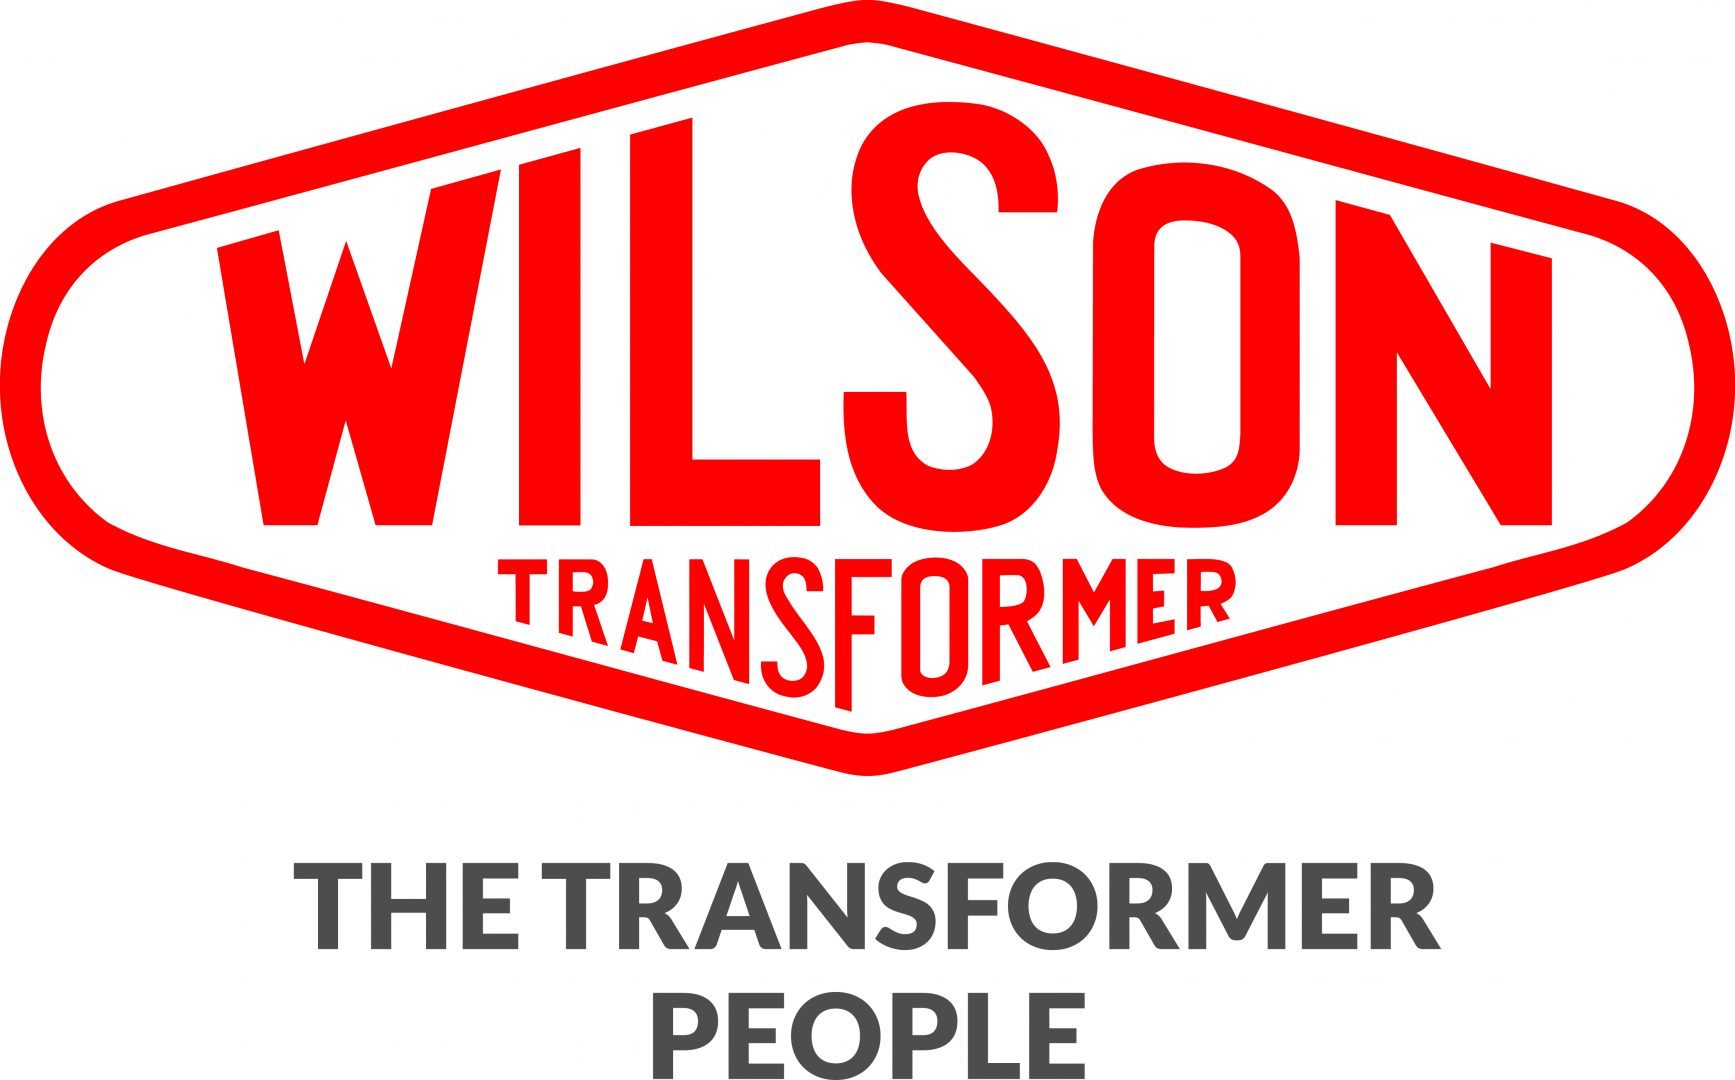 Wilson-Transformer-Company-Logo.jpg